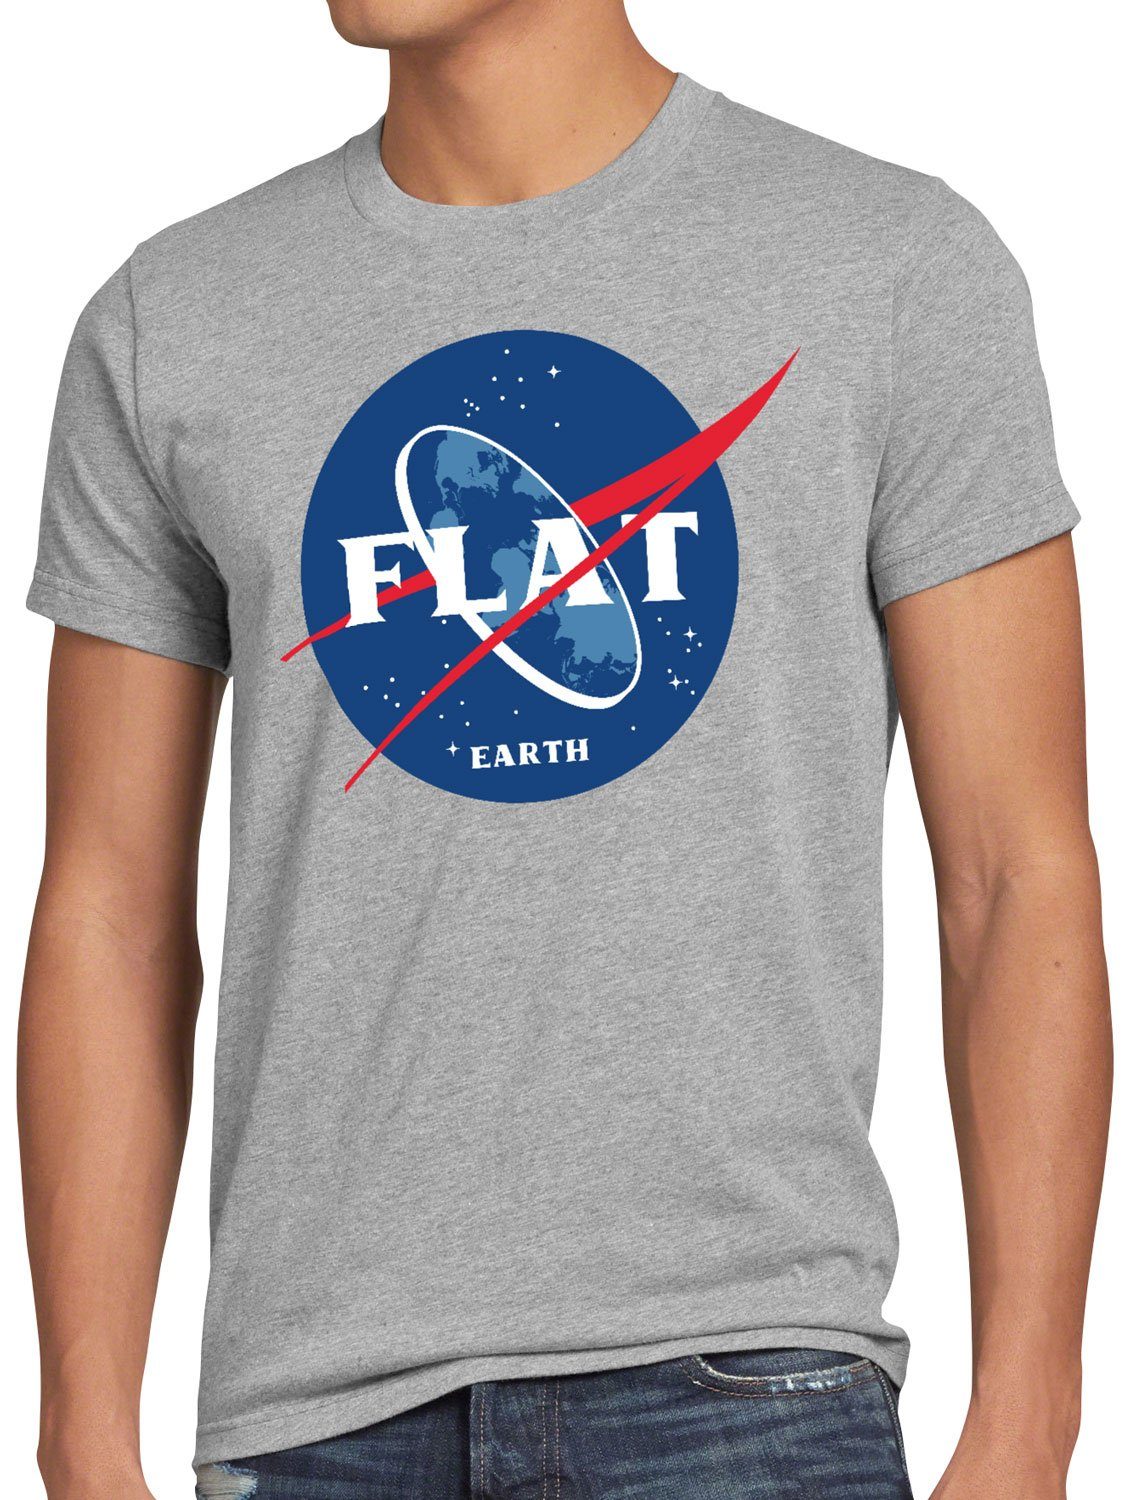 style3 Print-Shirt Herren T-Shirt Flat Earth fernrohr weltraum astronomie grau meliert